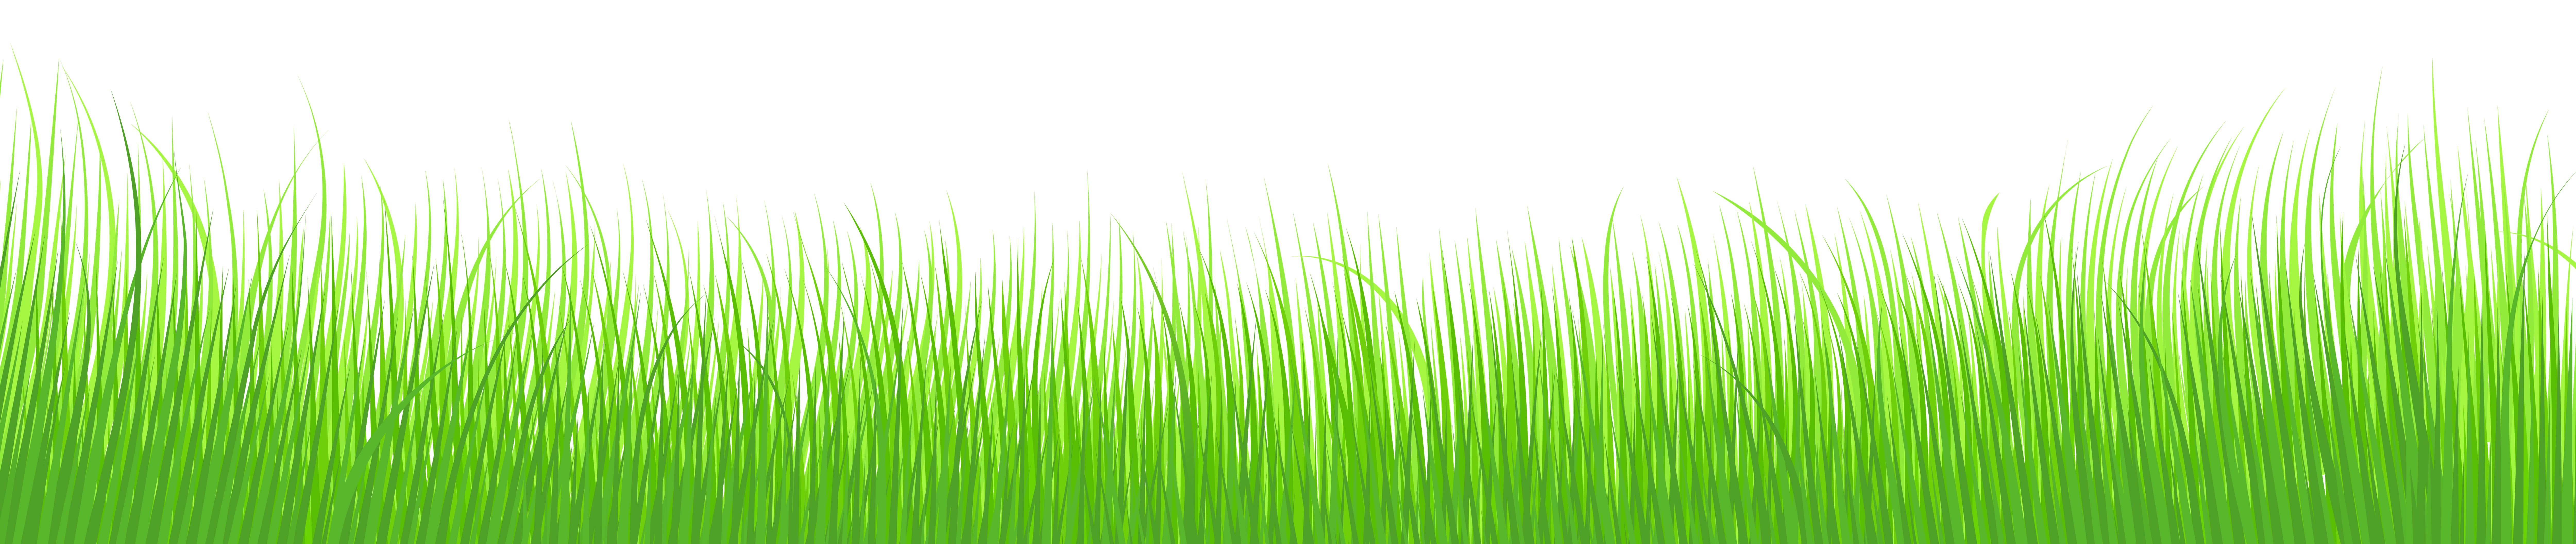 clipart of green grass - photo #42